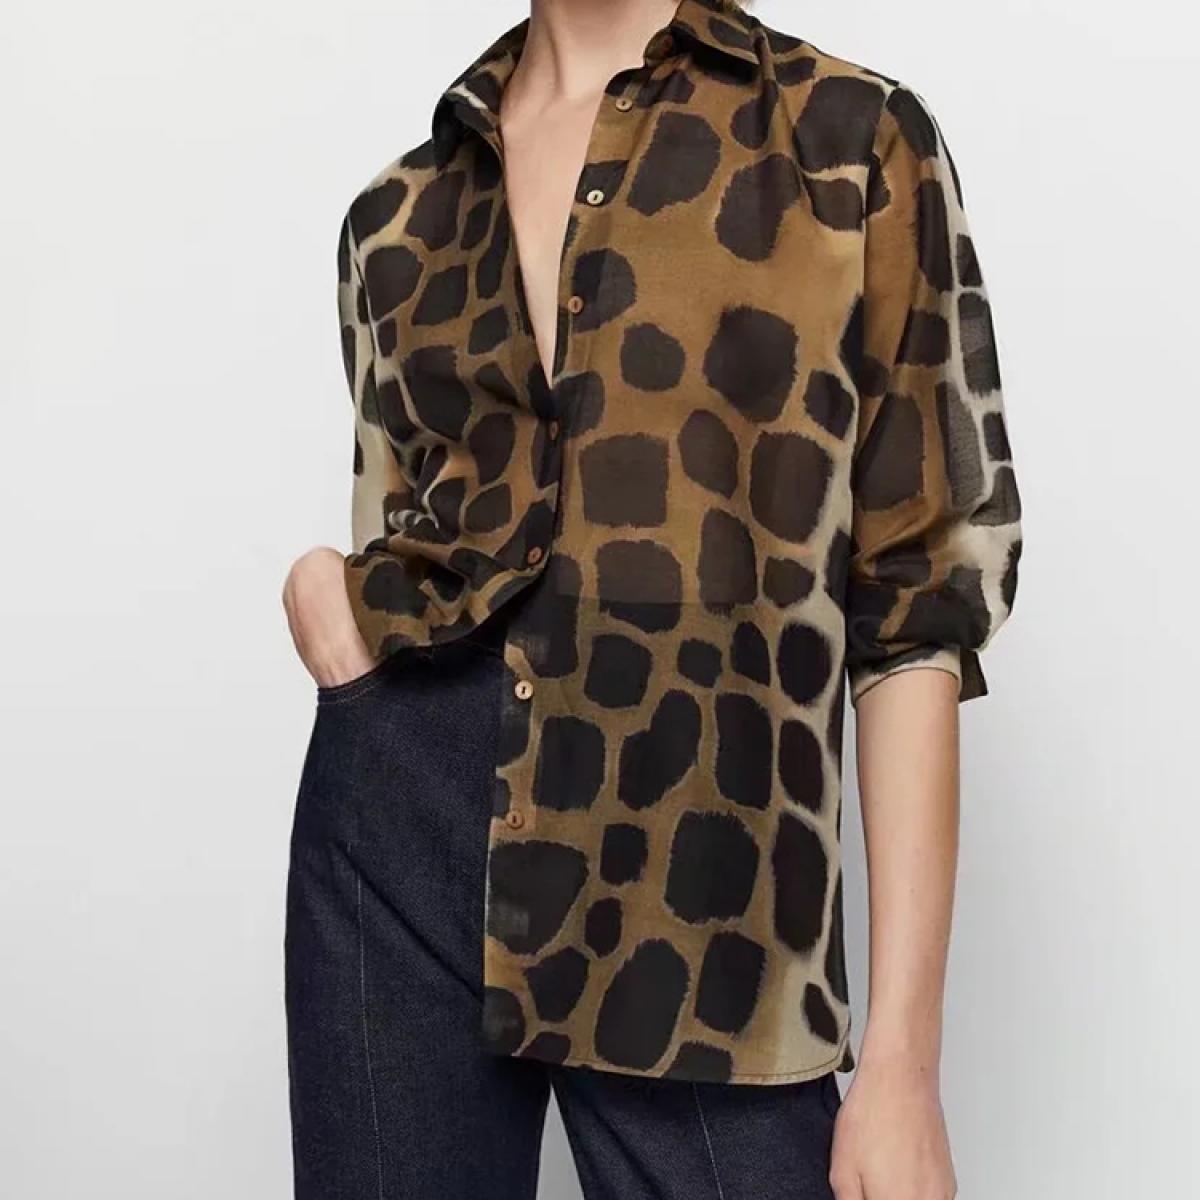 Women Silk Shirts Blouses Women Leopard Print Shirts Women Shirt